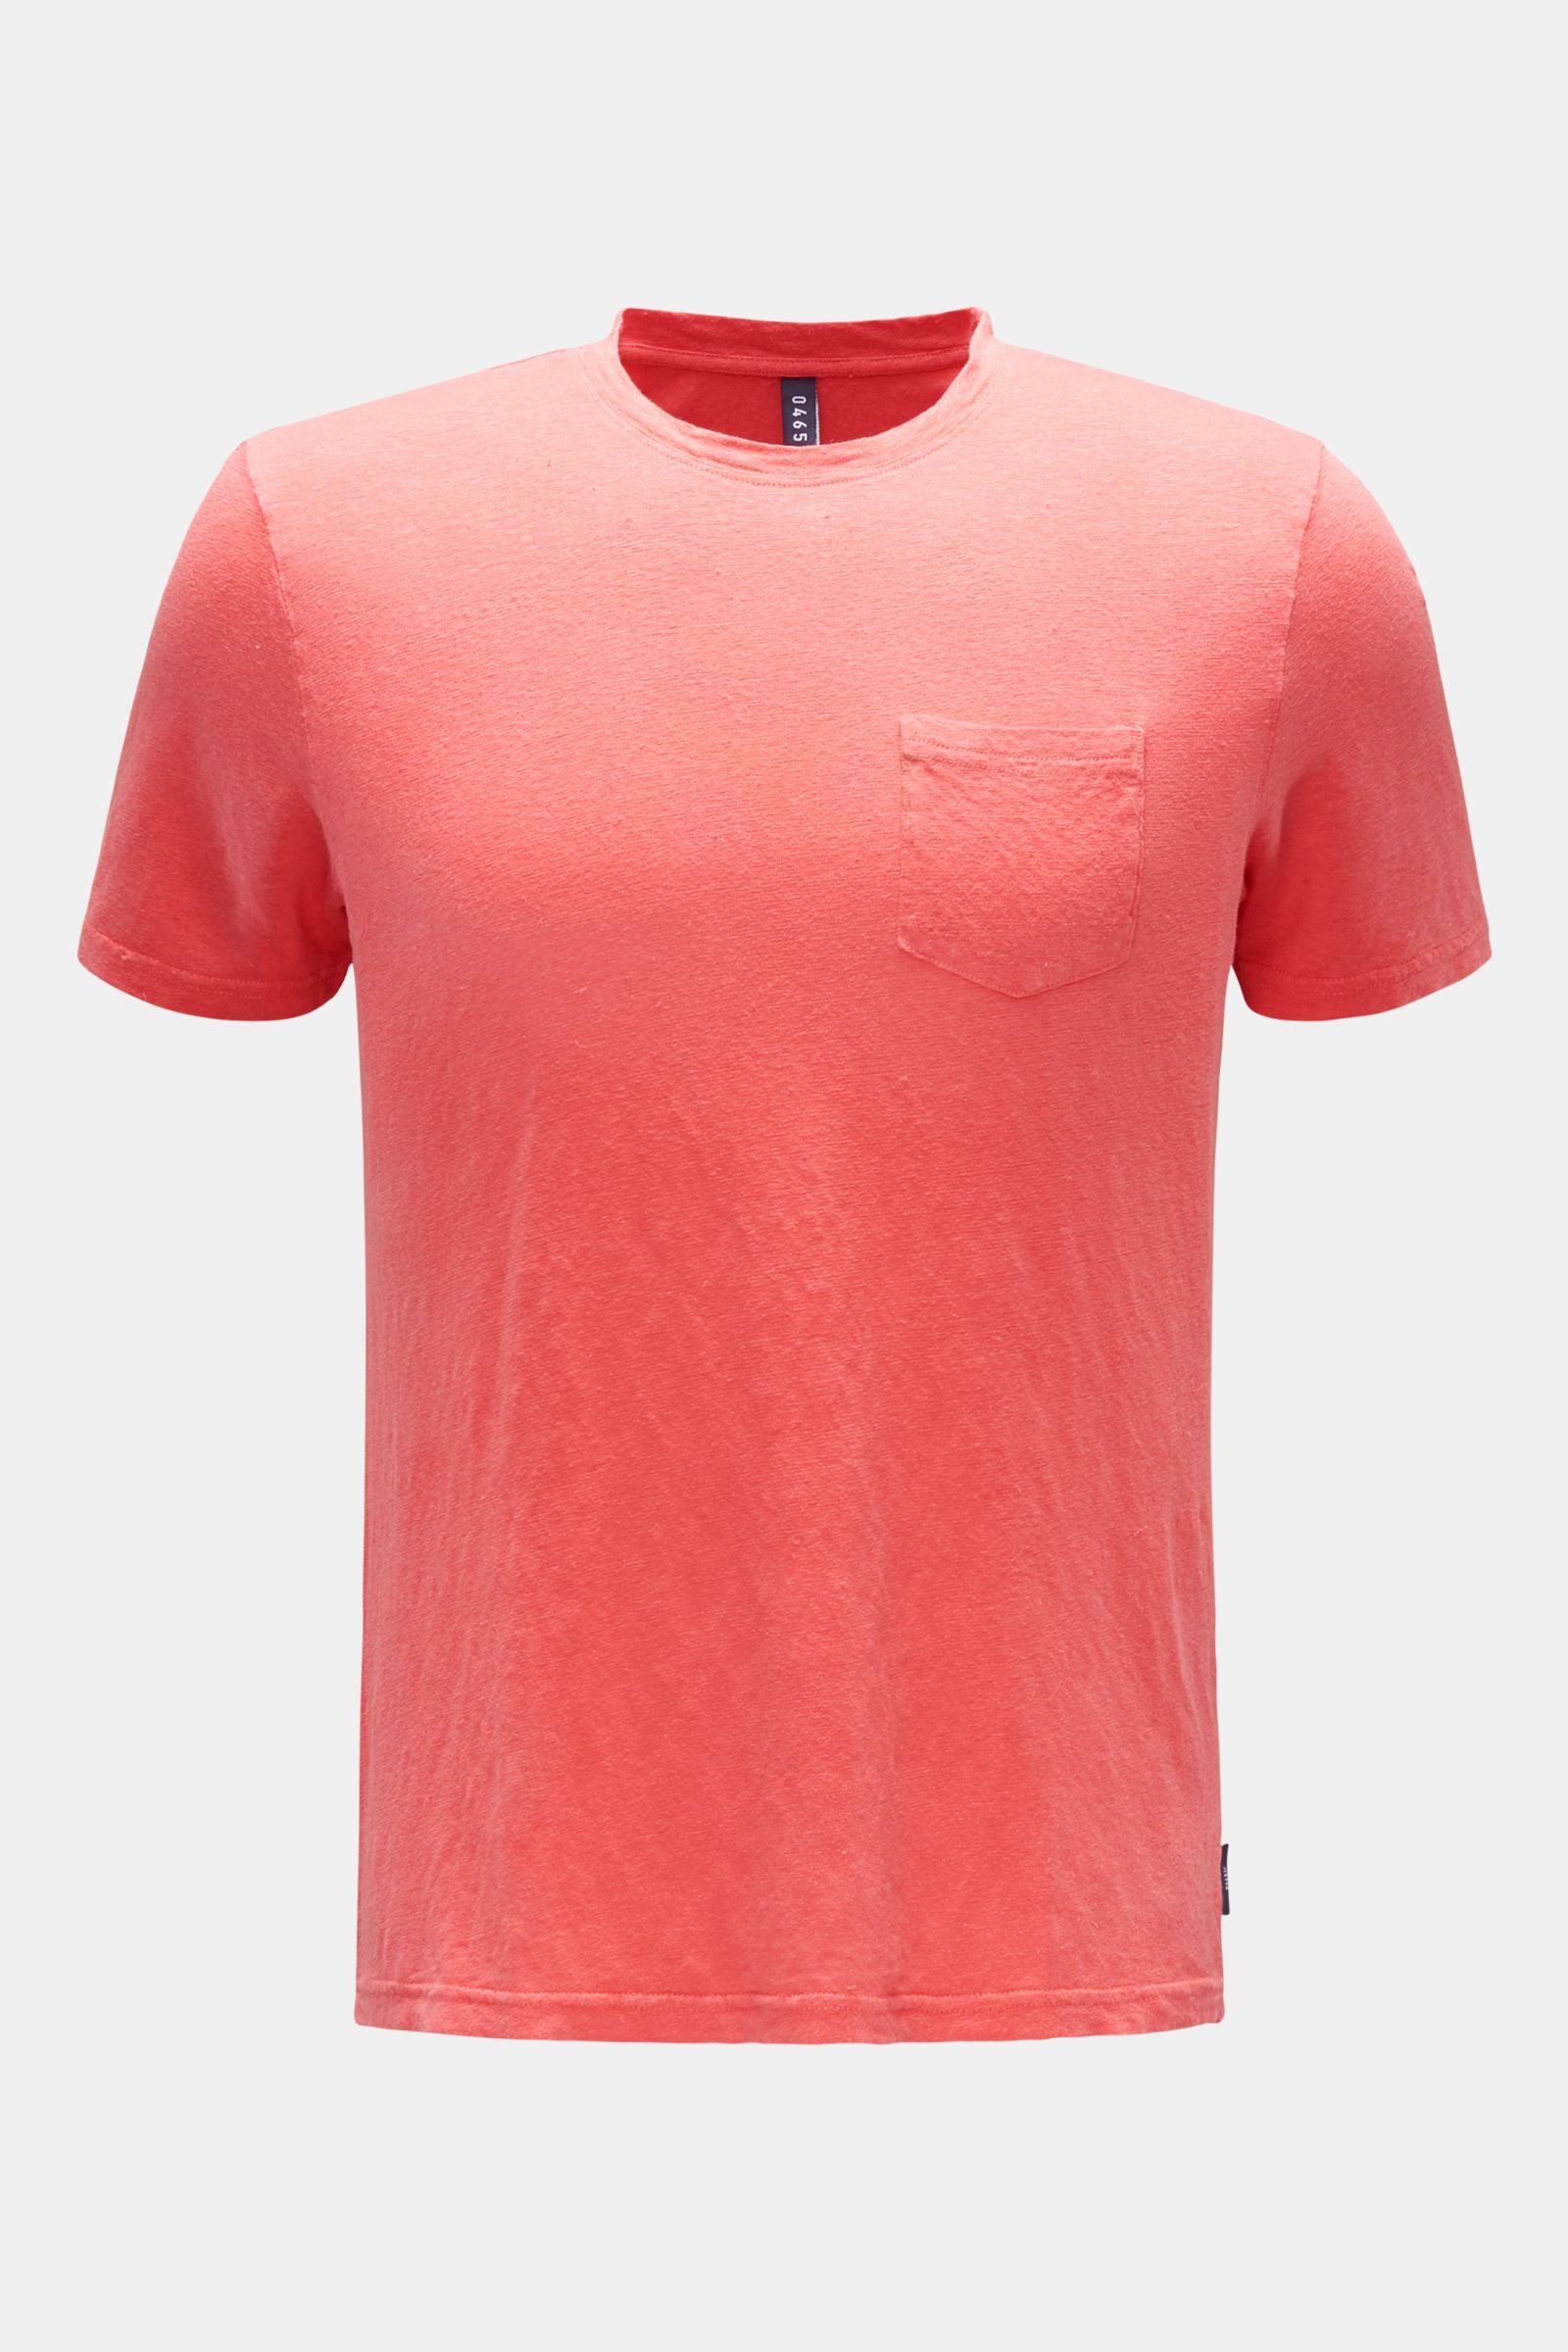 Linen crew neck T-shirt coral